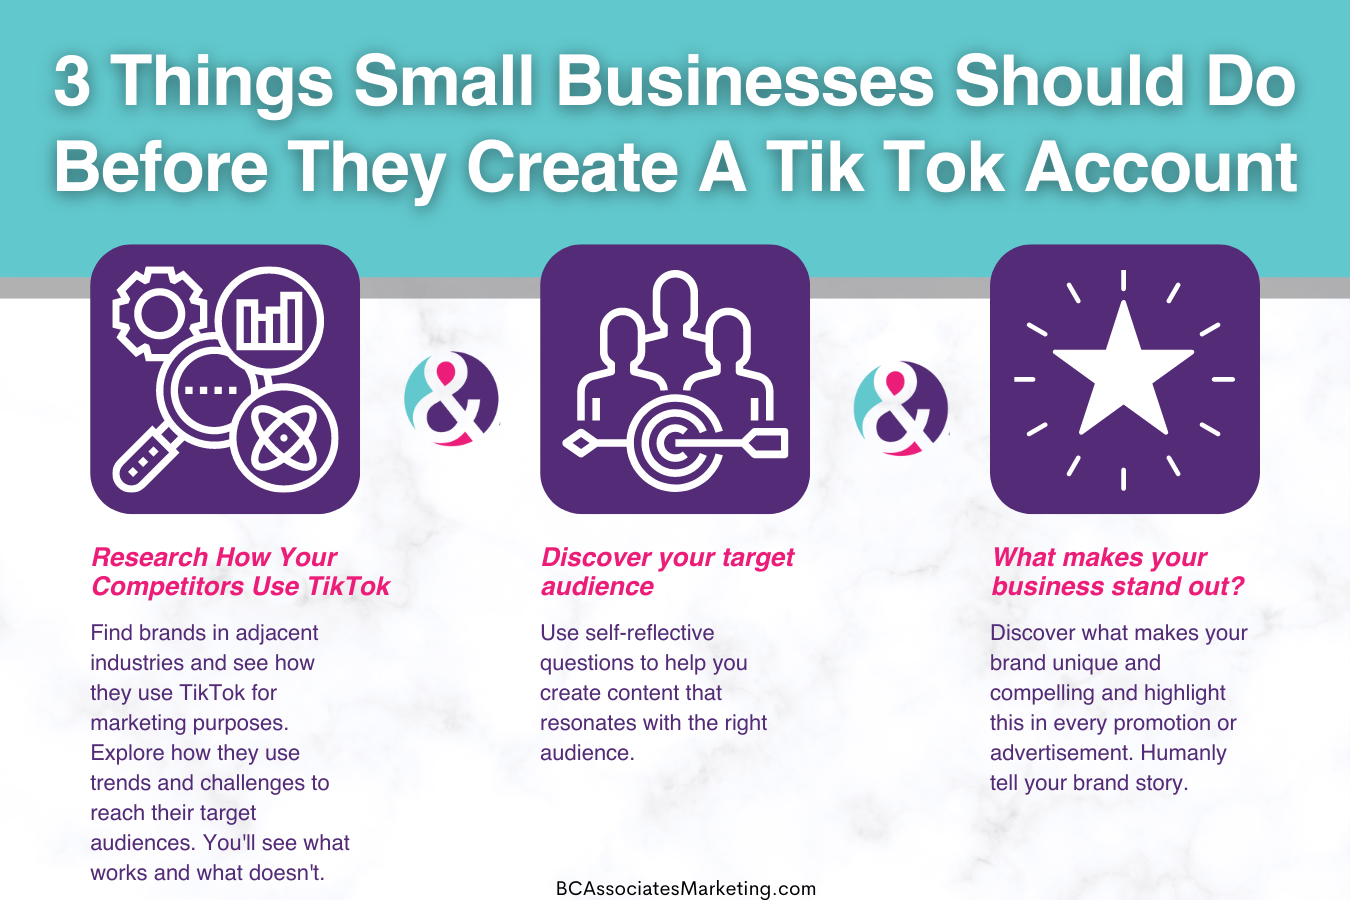 TikTok advertising benefits small businesses